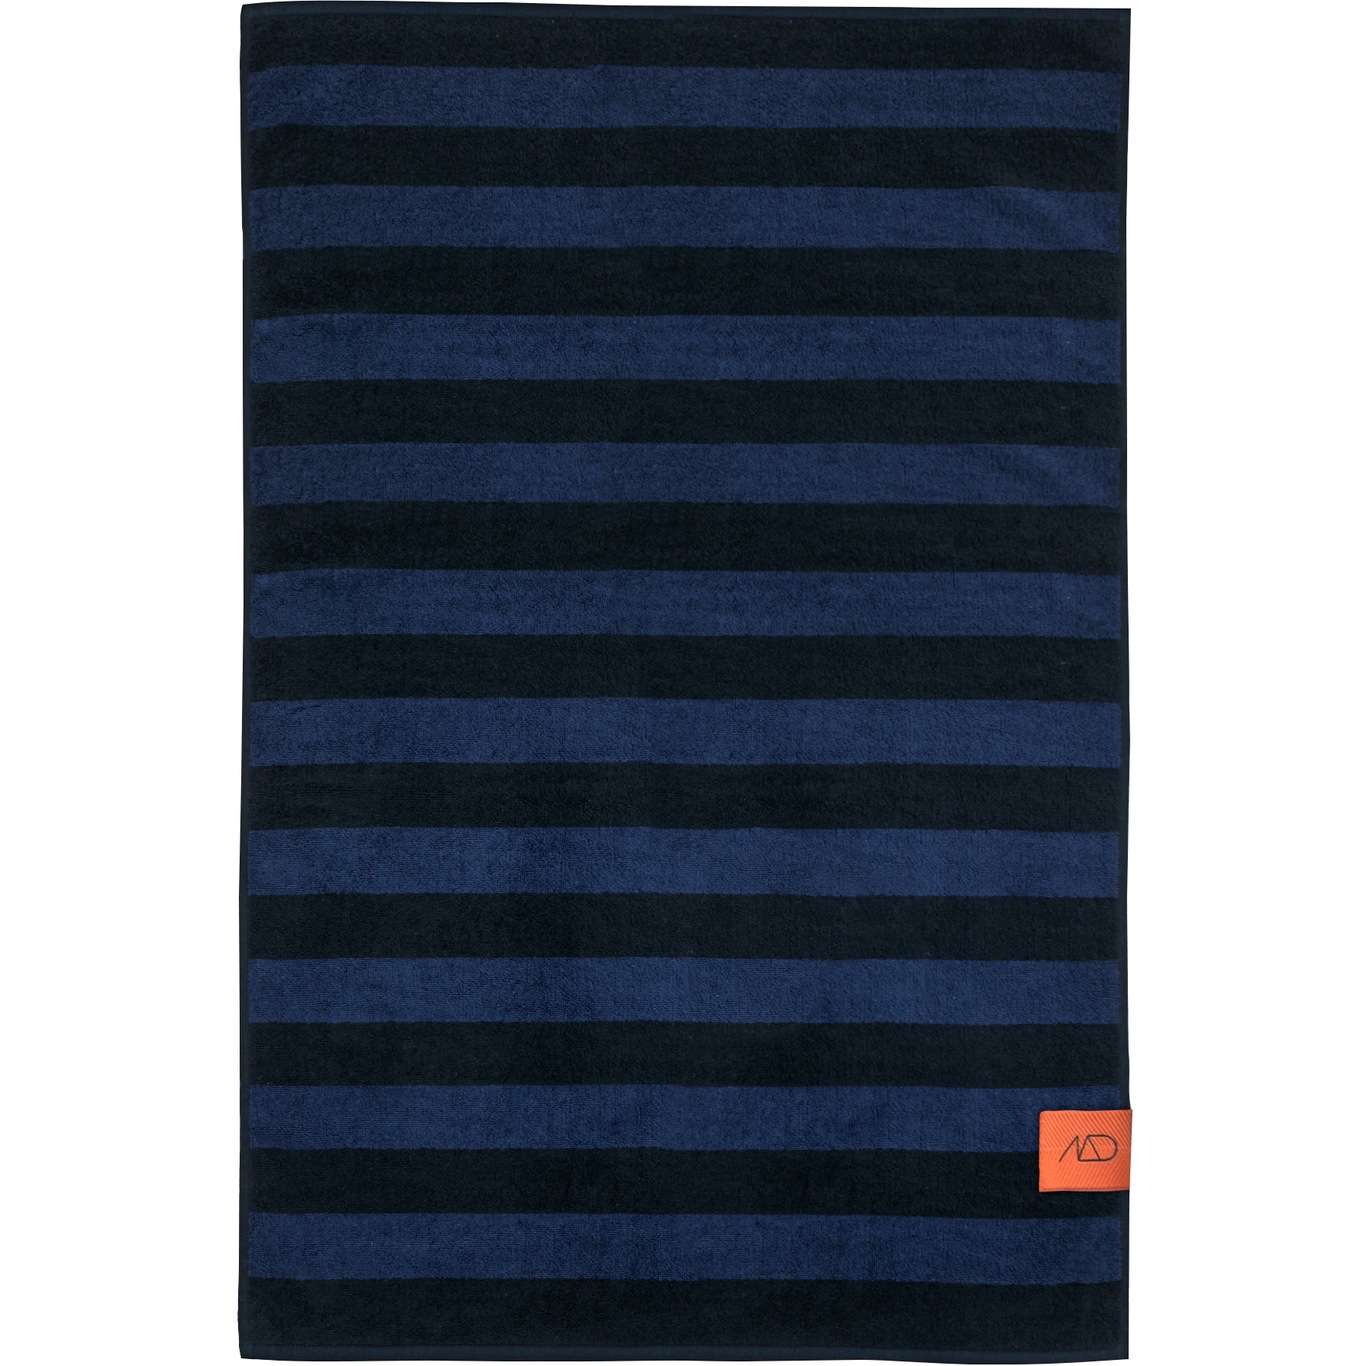 Aros Towel Midnight Blue 2-pack, 35x55 cm